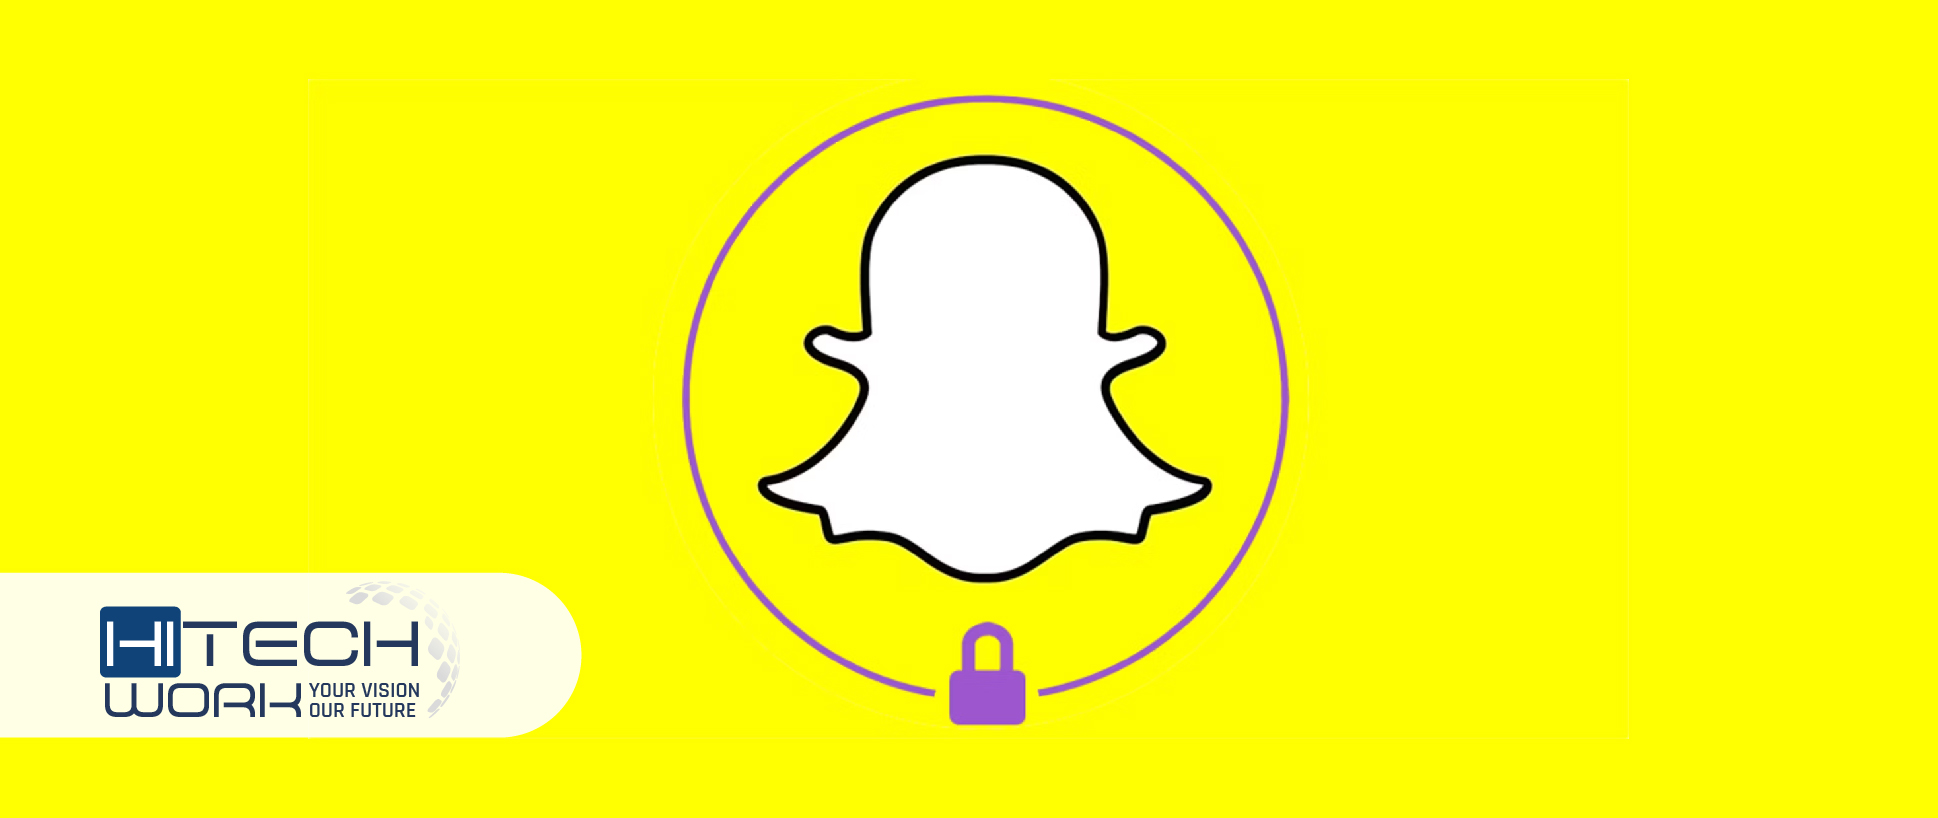 How to Unlock Snapchat